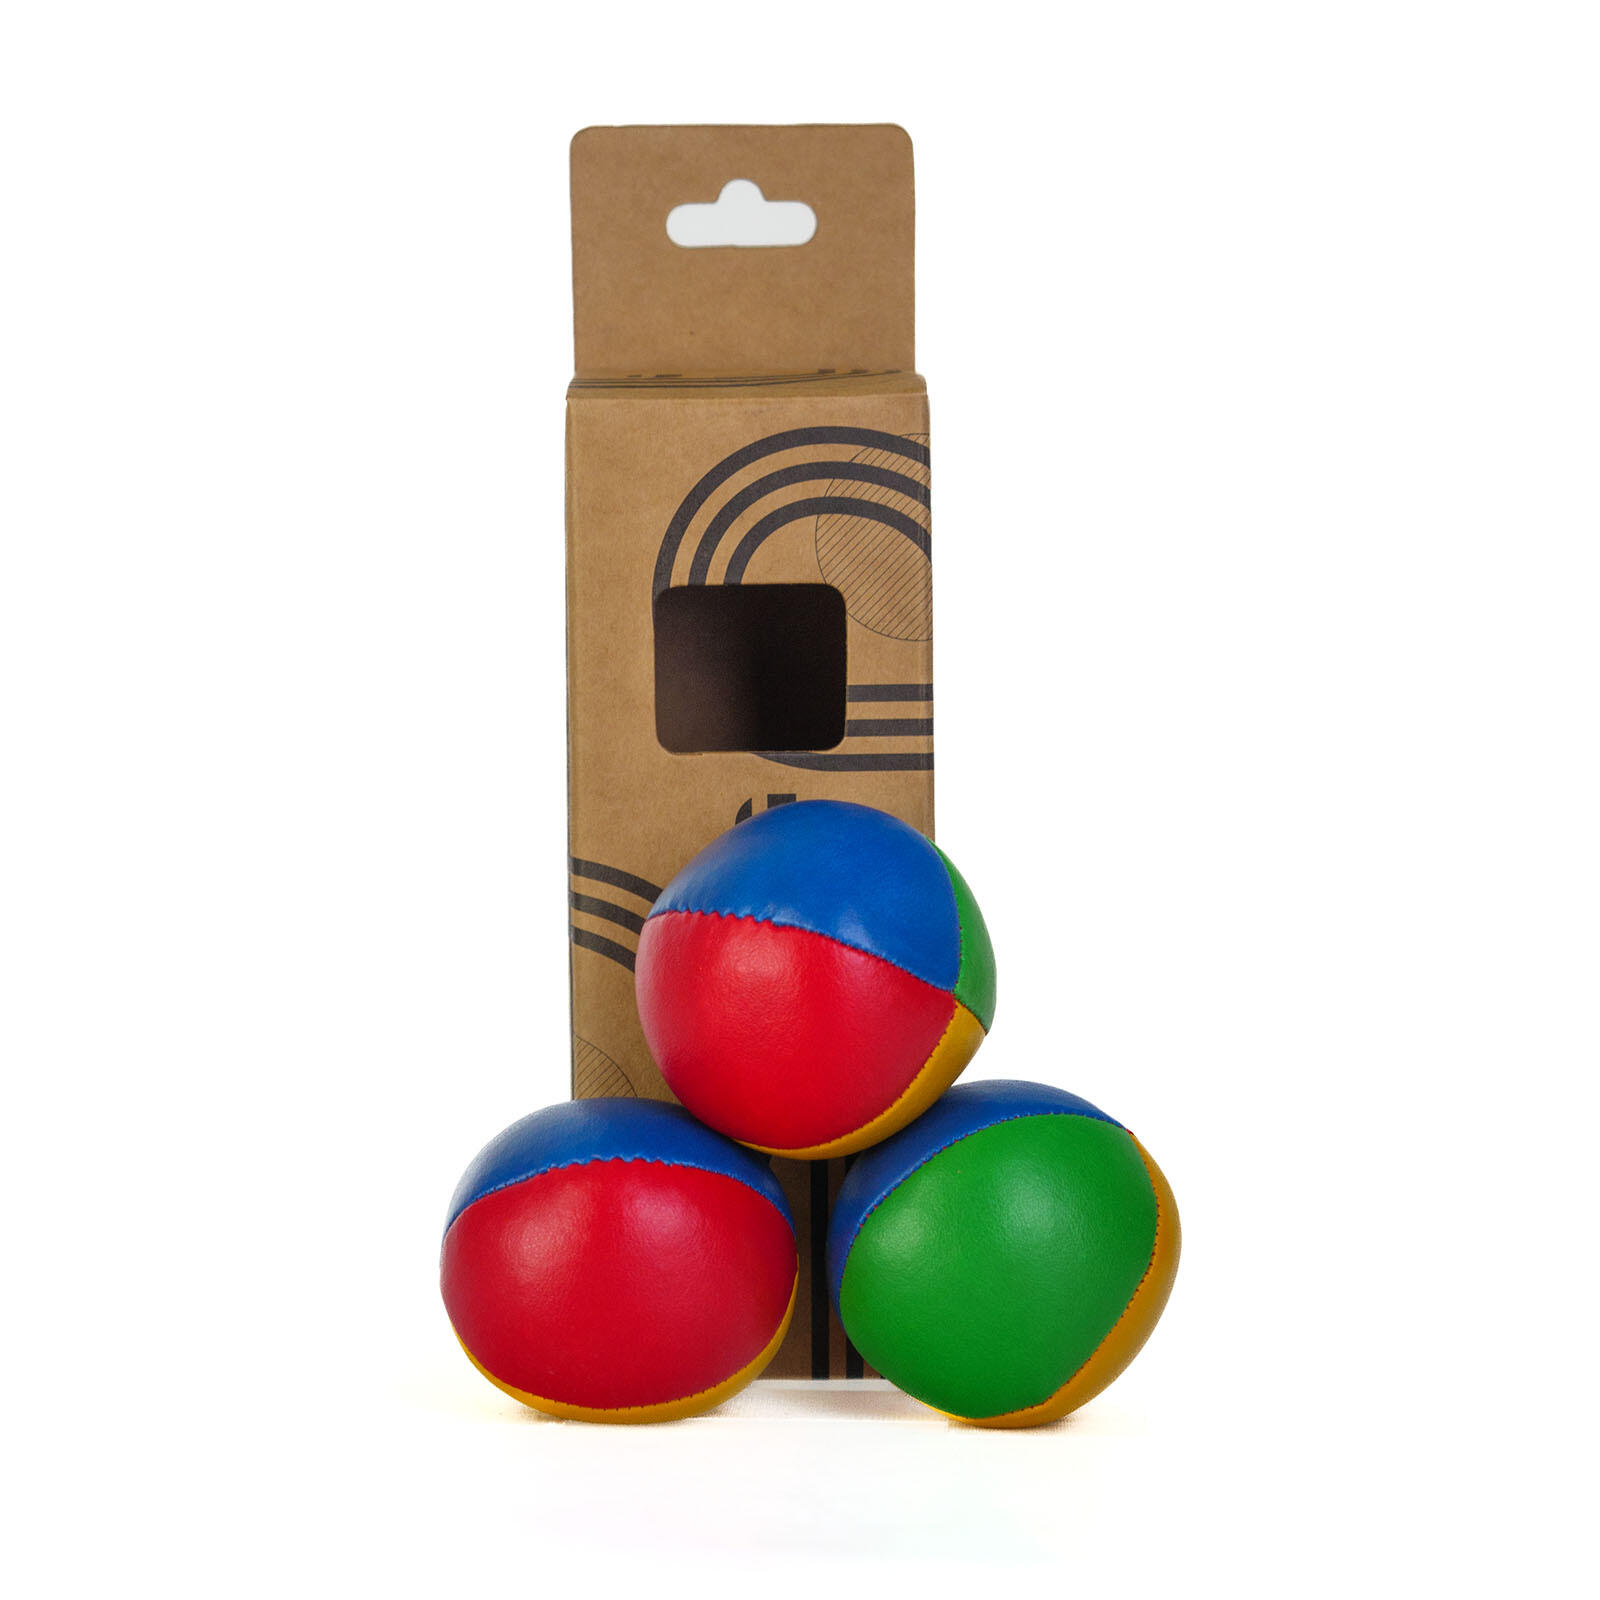 FIRETOYS Firetoys Juggling - 120g Thud - Set of 3x Juggling Balls